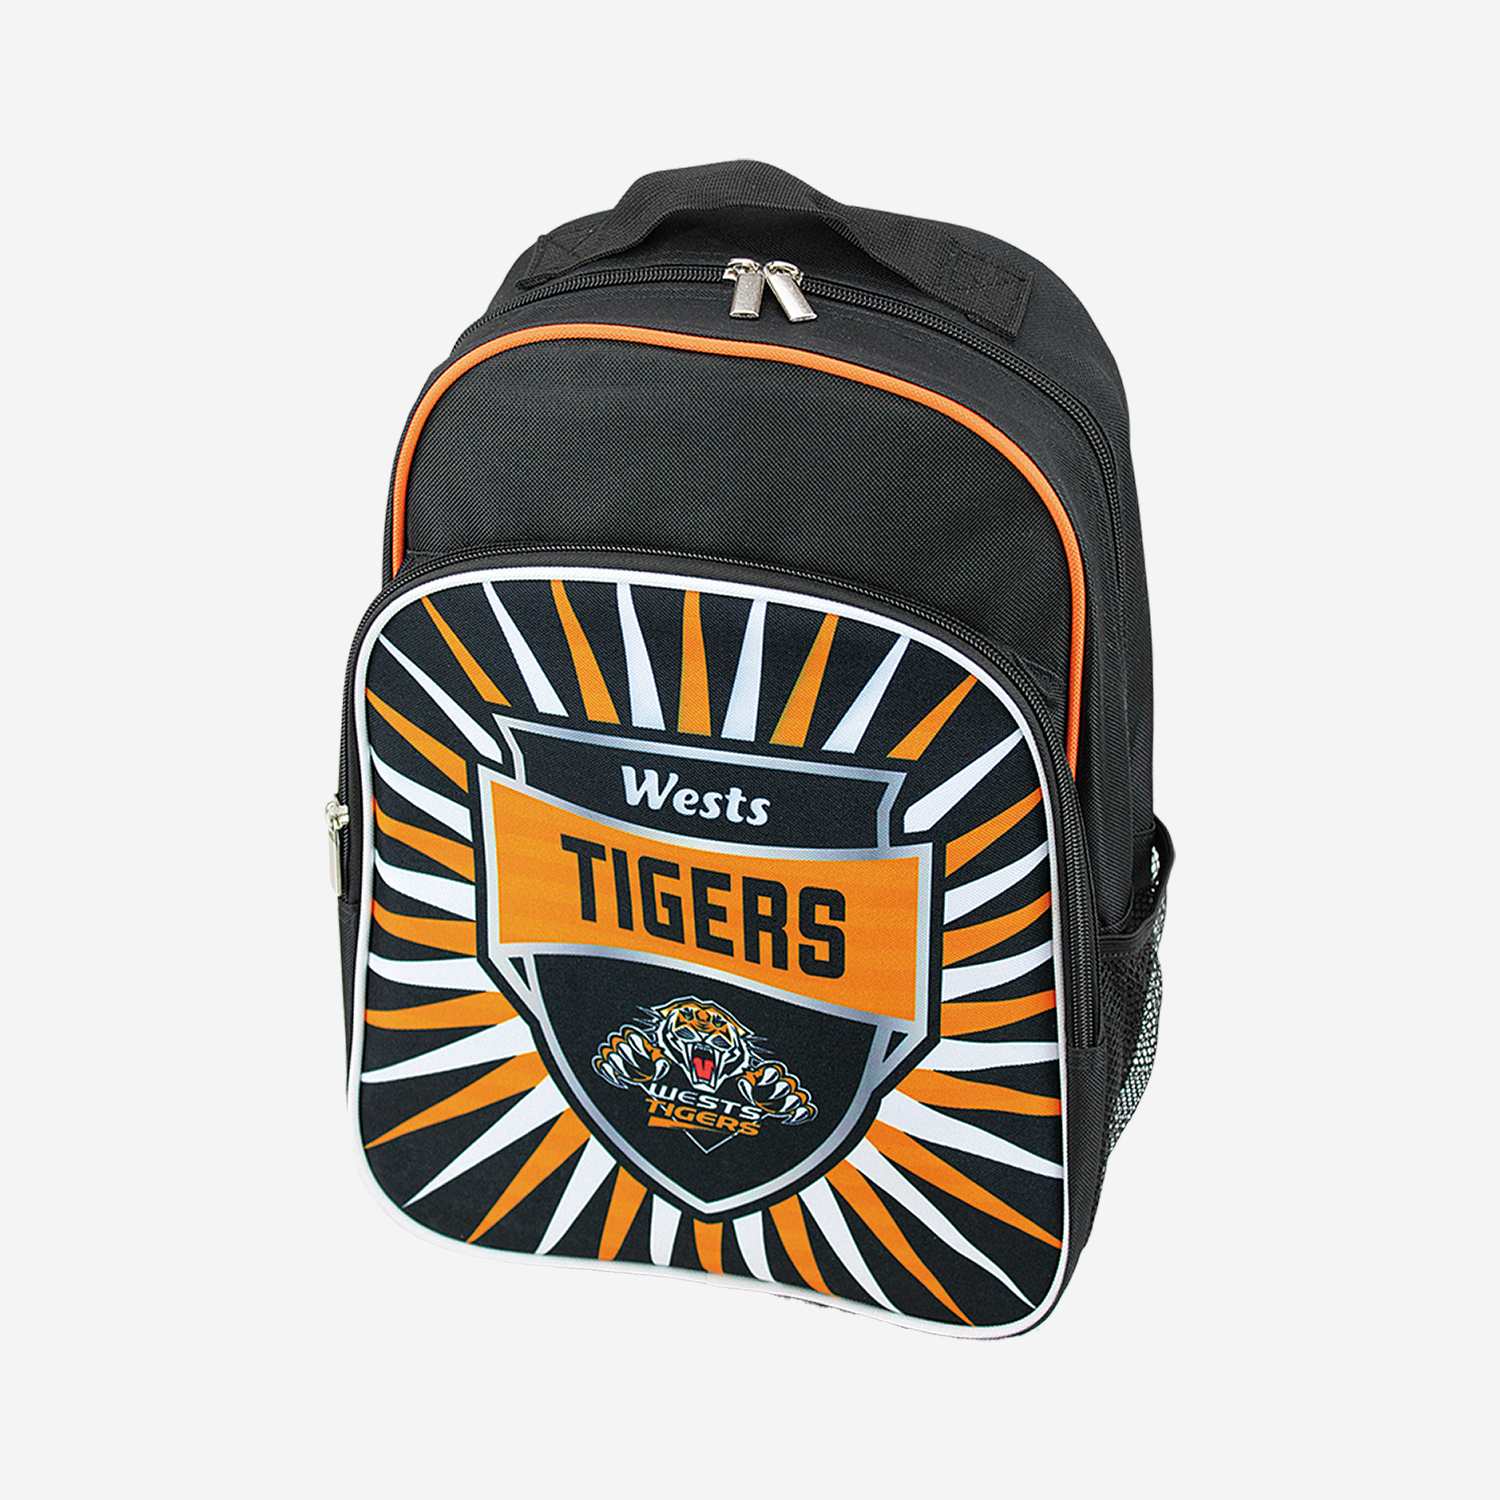 West Tigers Bag